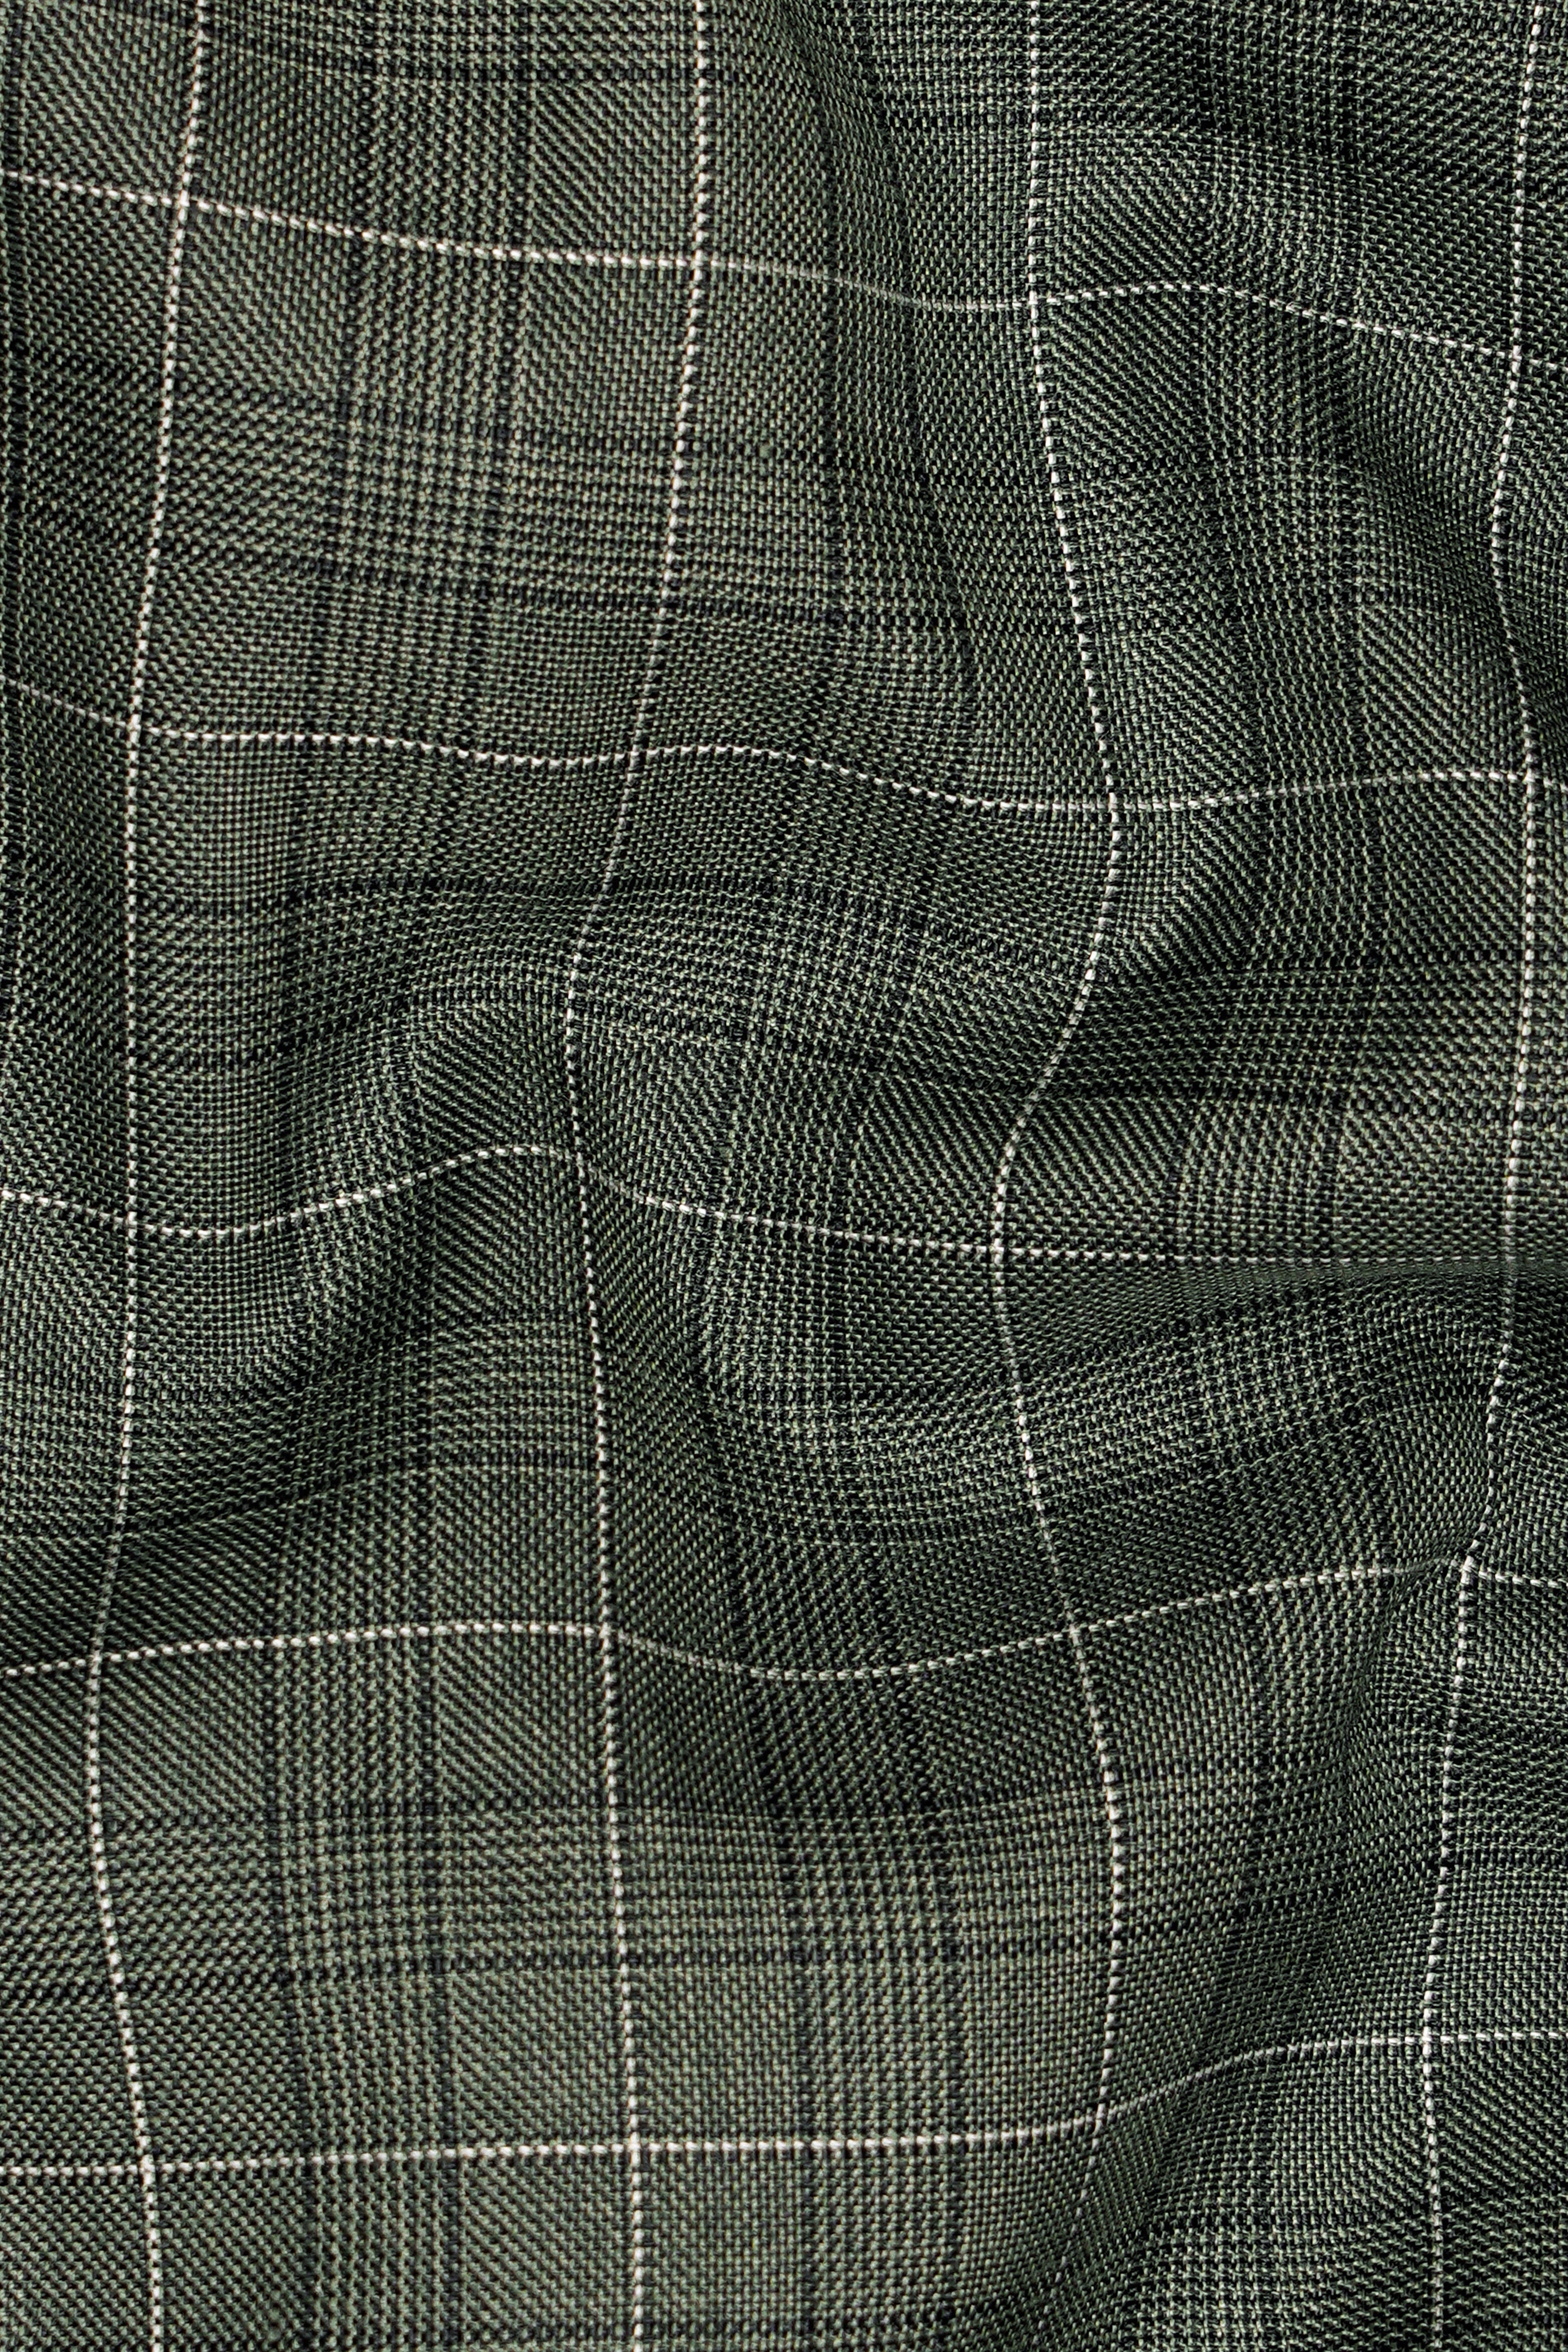 Artichoke Green Checkered Wool Rich Waistcoat V2913-36, V2913-38, V2913-40, V2913-42, V2913-44, V2913-46, V2913-48, V2913-50, V2913-13, V2913-54, V2913-56, V2913-58, V2913-60